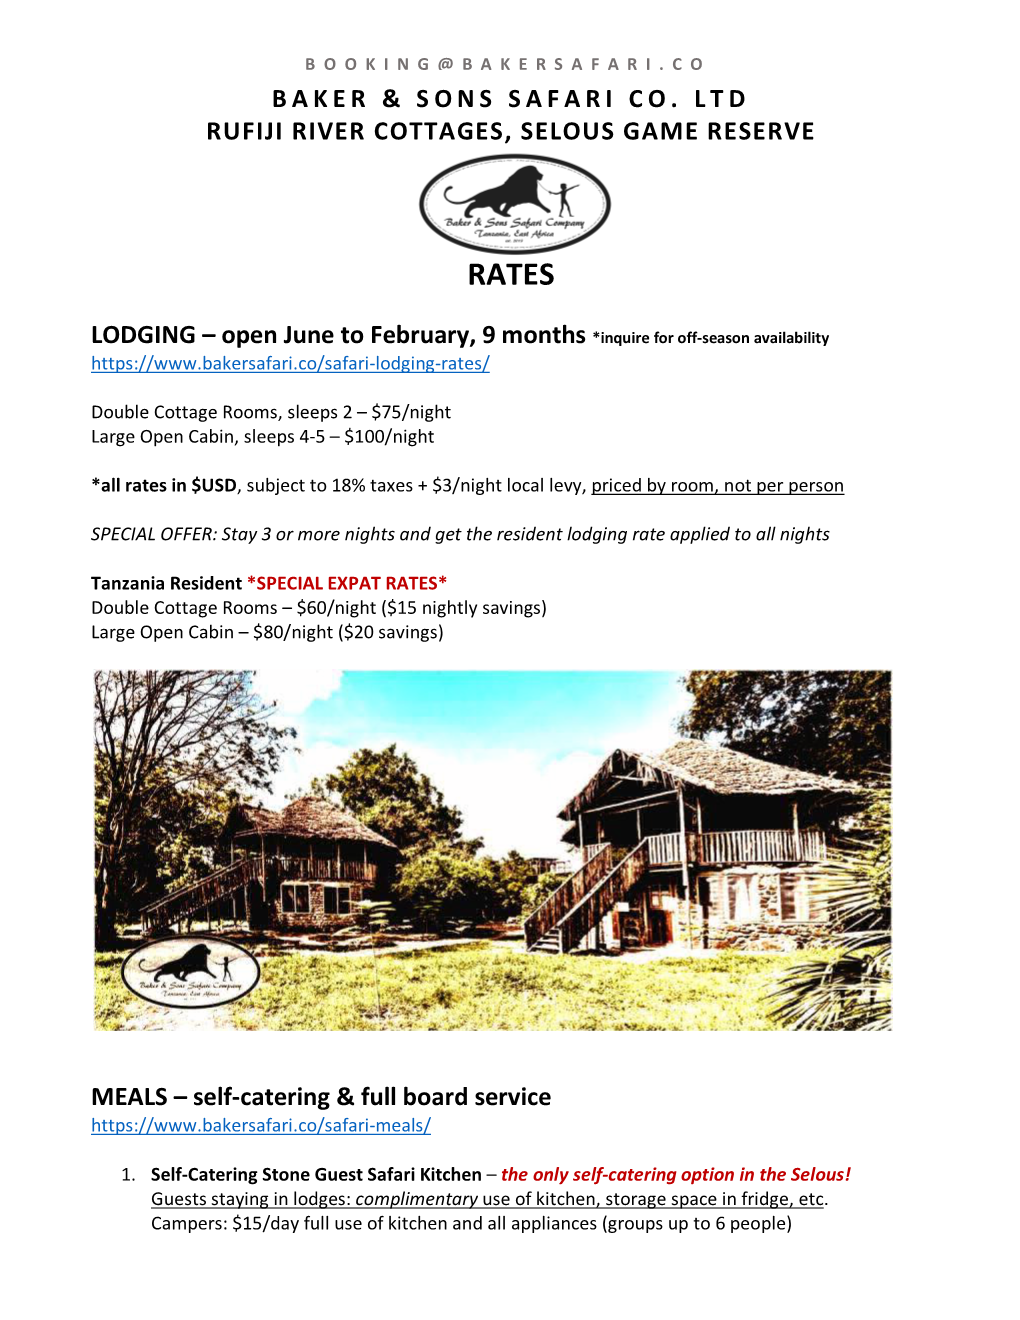 Baker & Sons Safari Co. Ltd Rufiji River Cottages, Selous Game Reserve